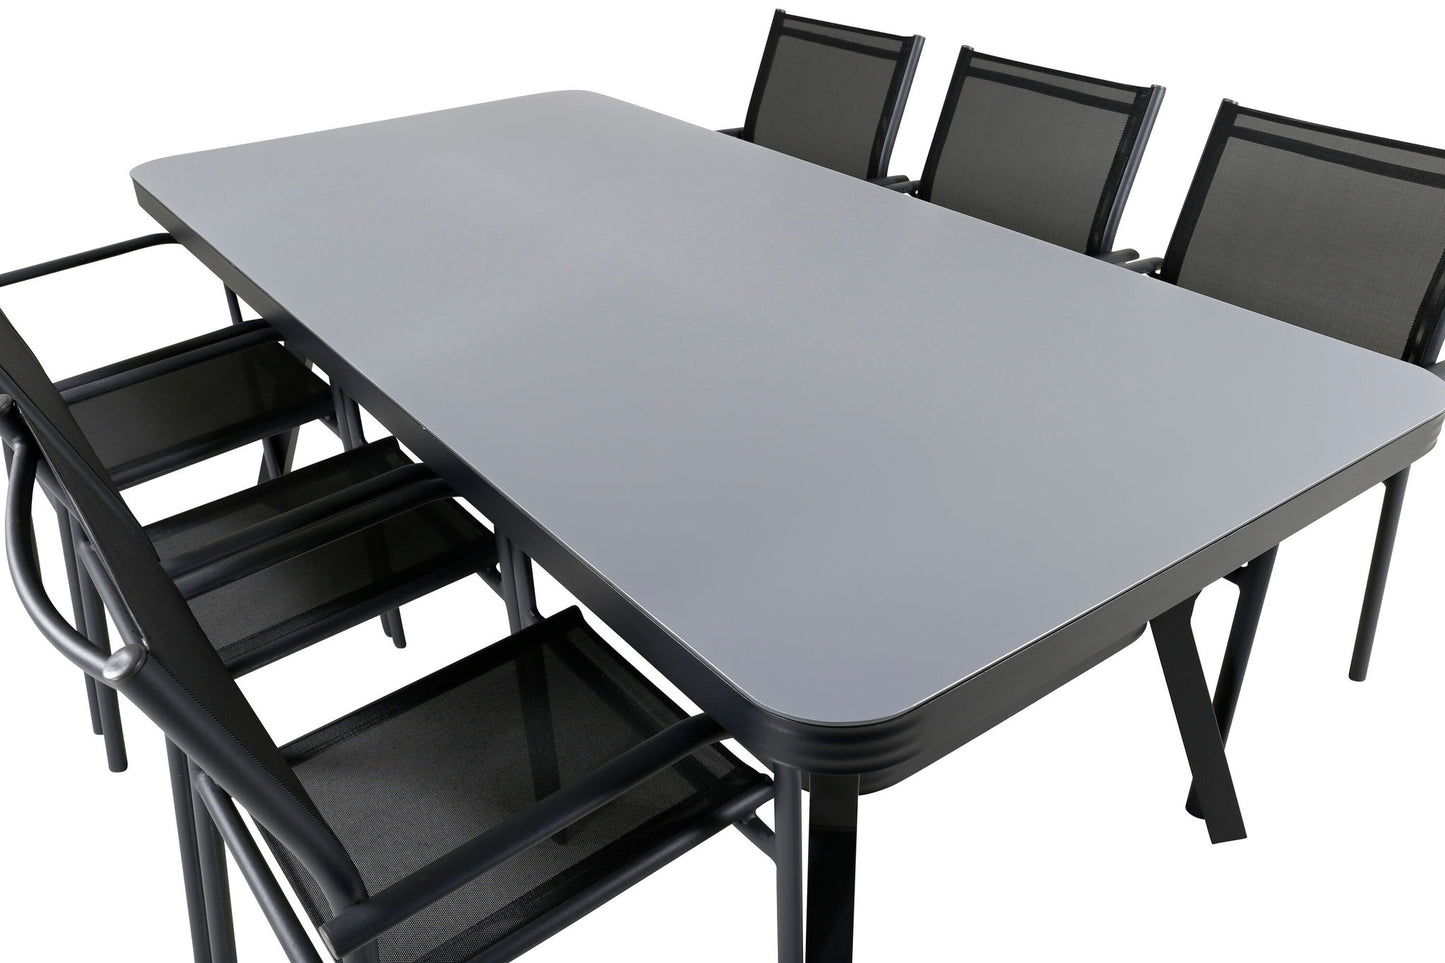 Virya - Spisebord, Sort Alu / Grå glas - big table+ Santorini Stol m. armlæn (Stabelbar) - Sort alu / Sort Tekstil